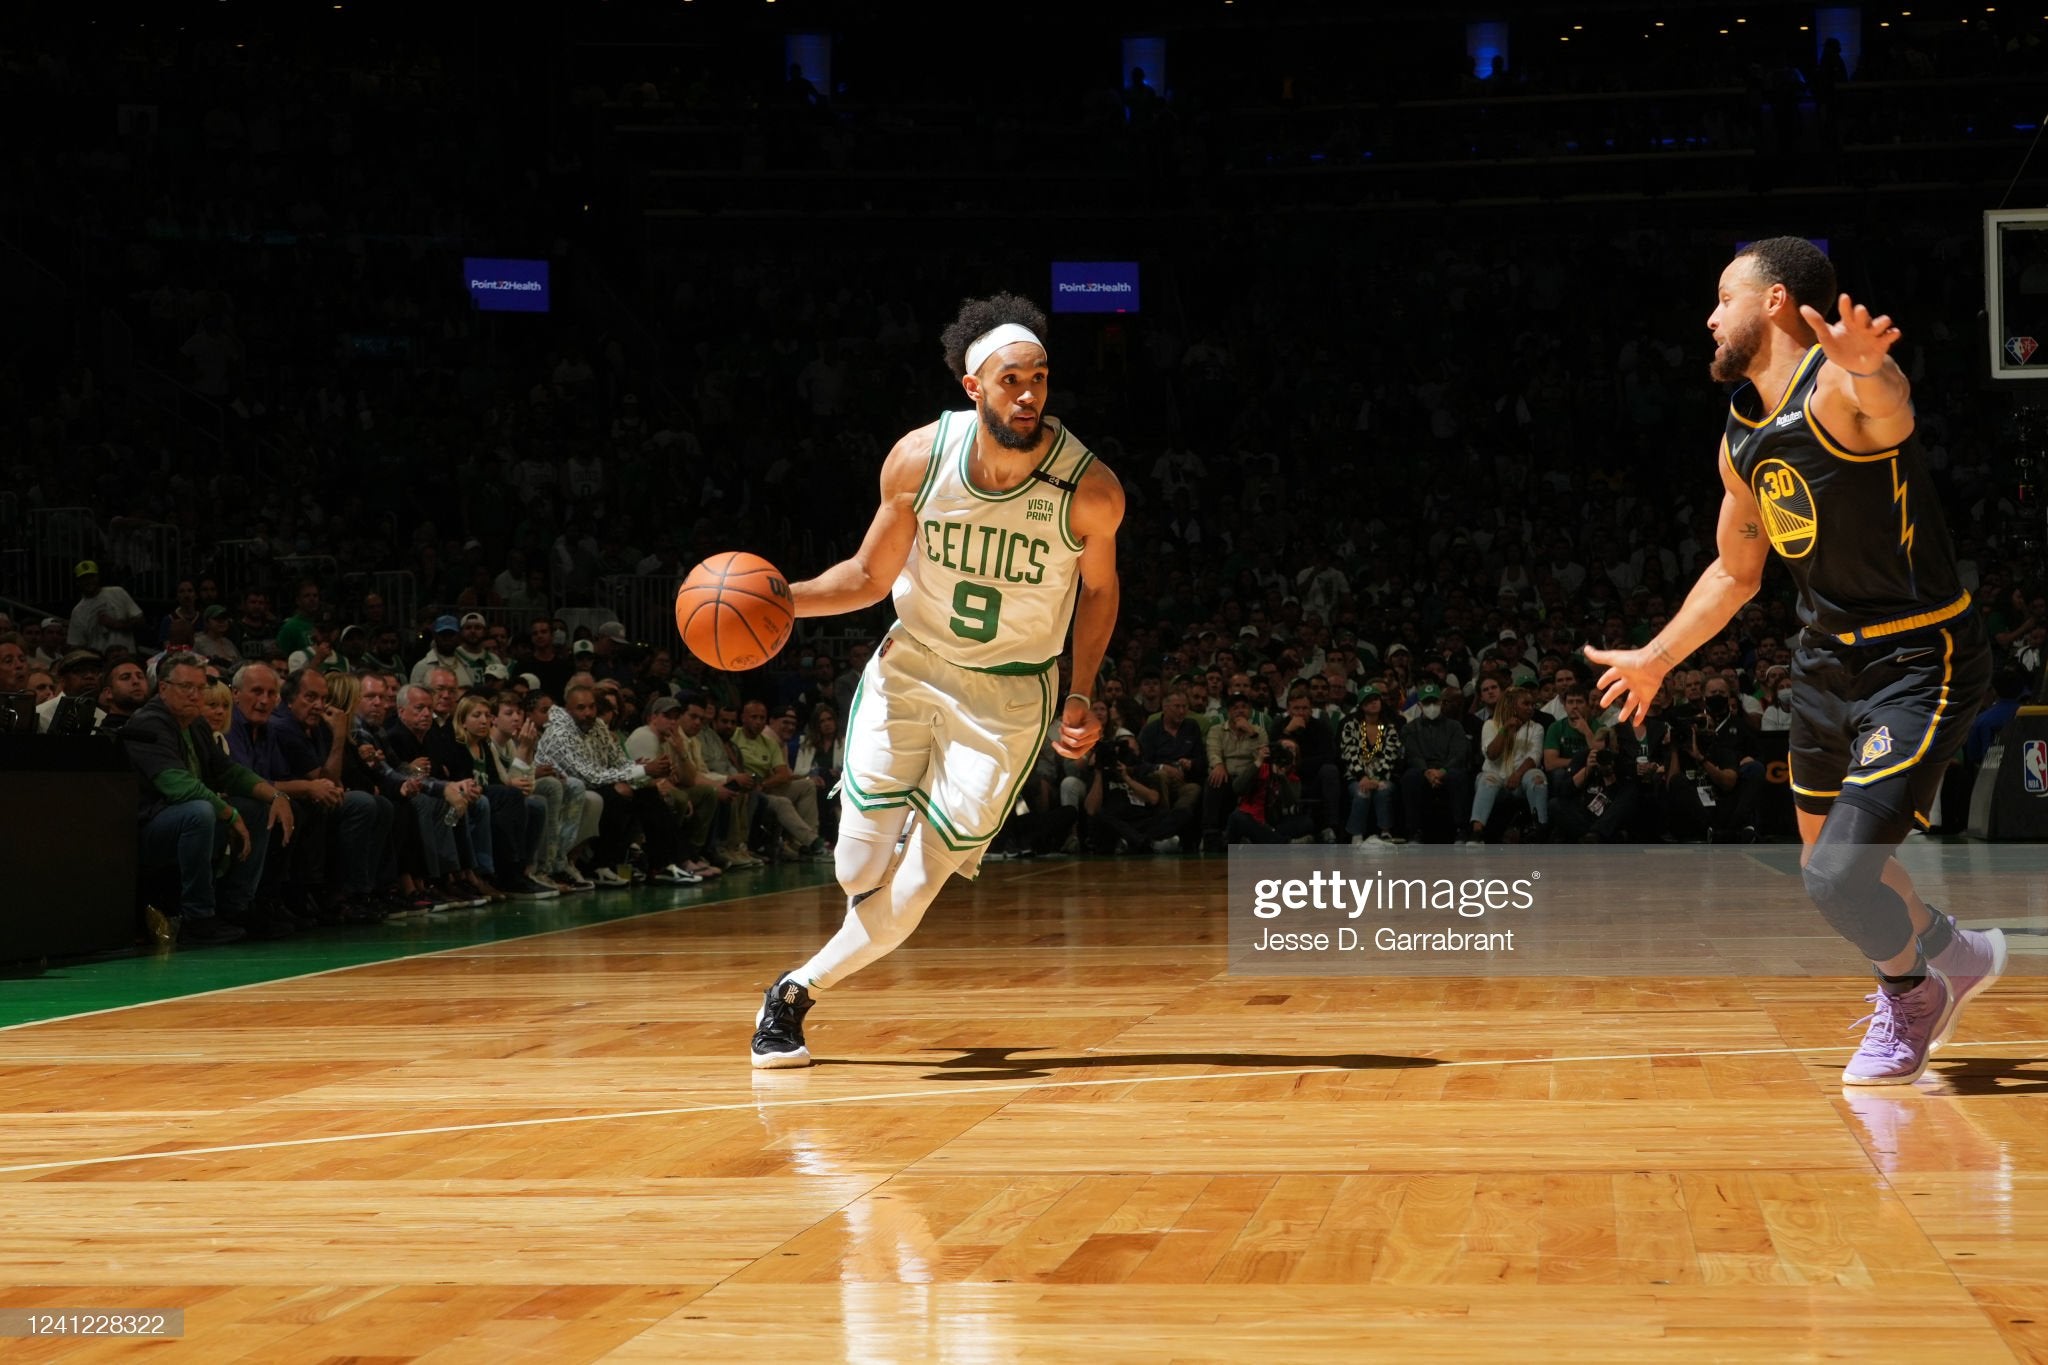 Jayson Tatum and Jaylen Brown Boston Celtics 8 x 10 Basketball Photo -  Dynasty Sports & Framing